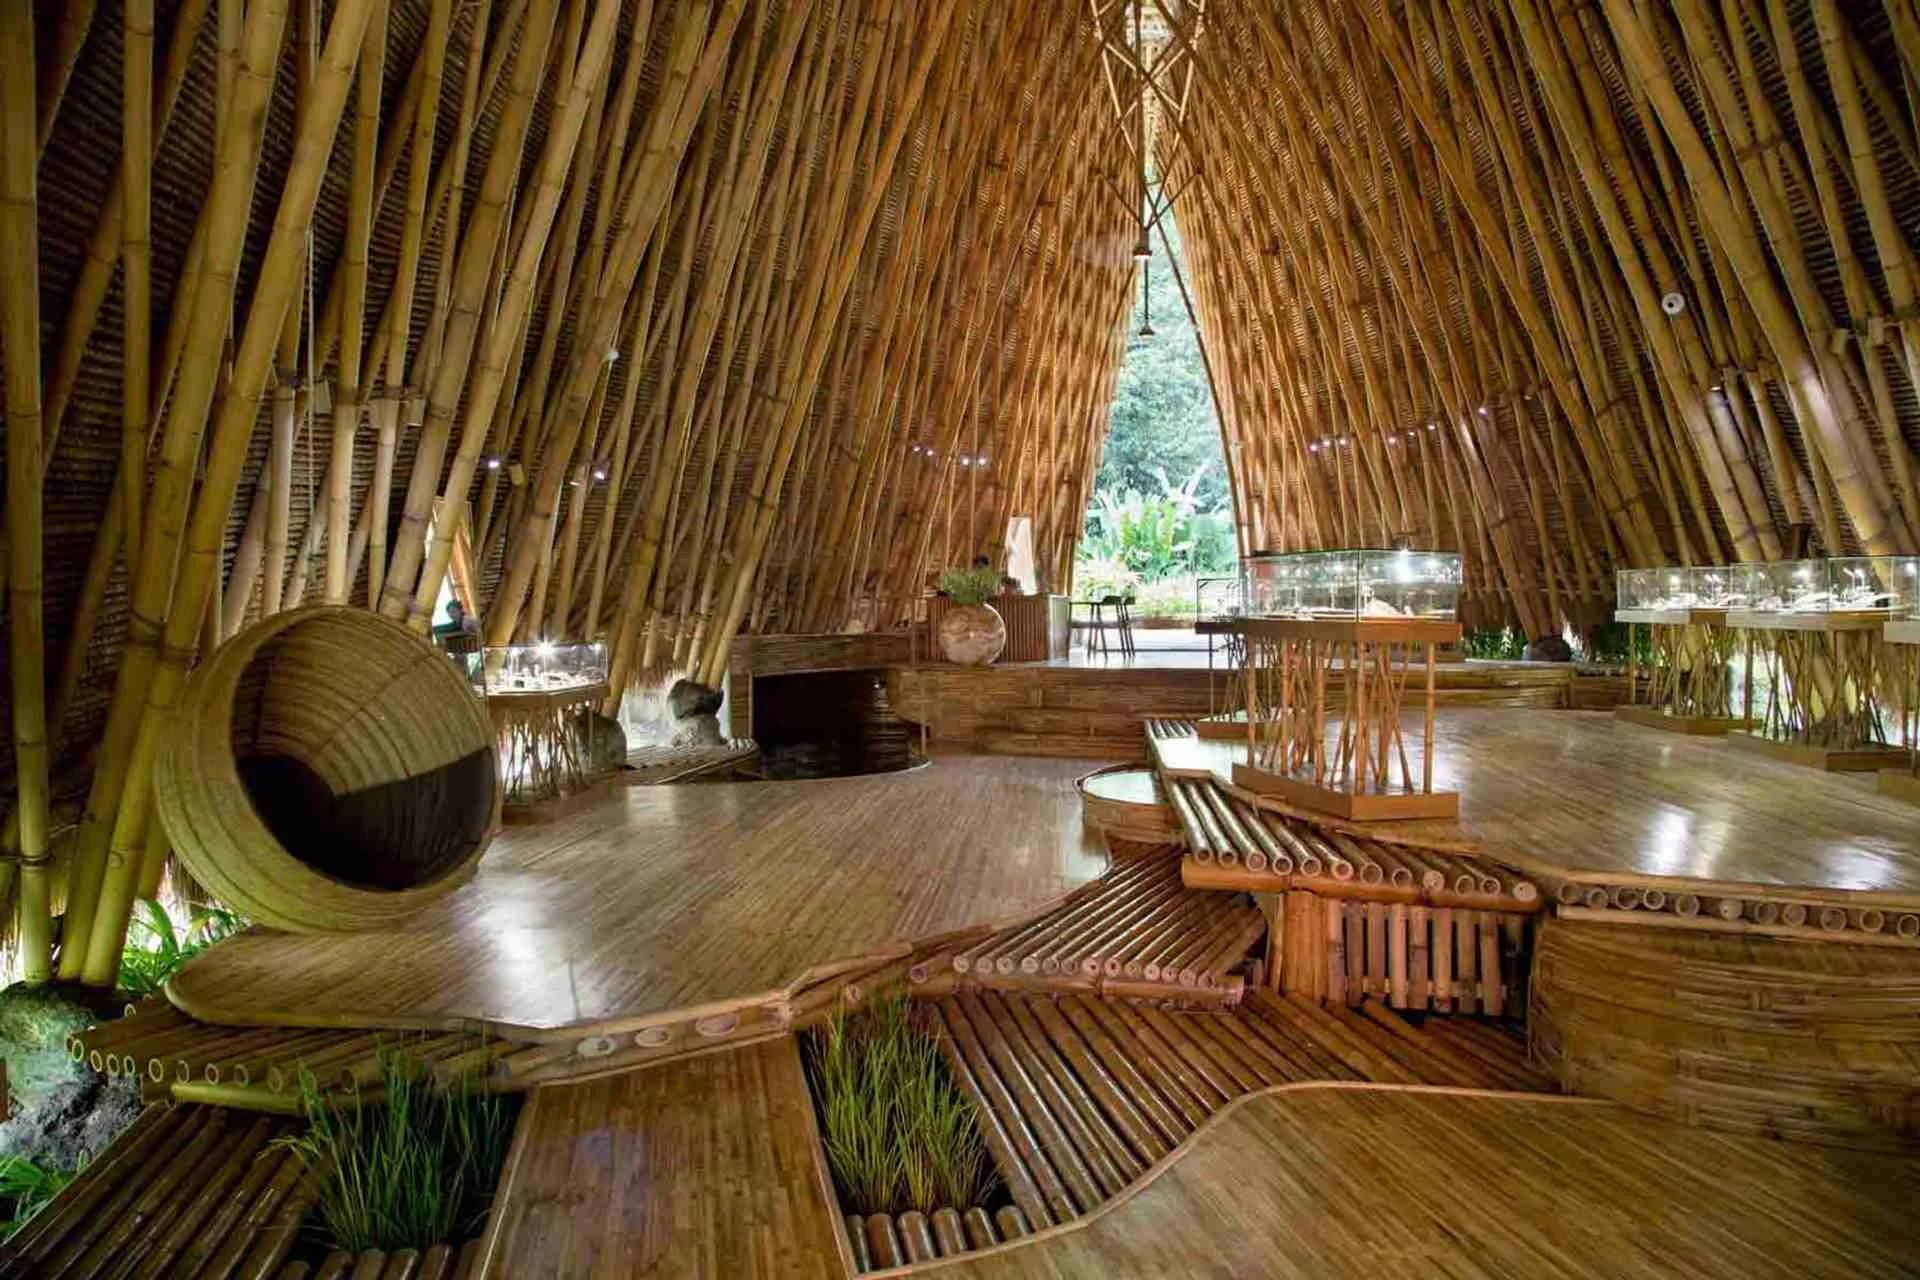 Bamboo interiors and floors at John Hardy Jewelry Showroom, Bali